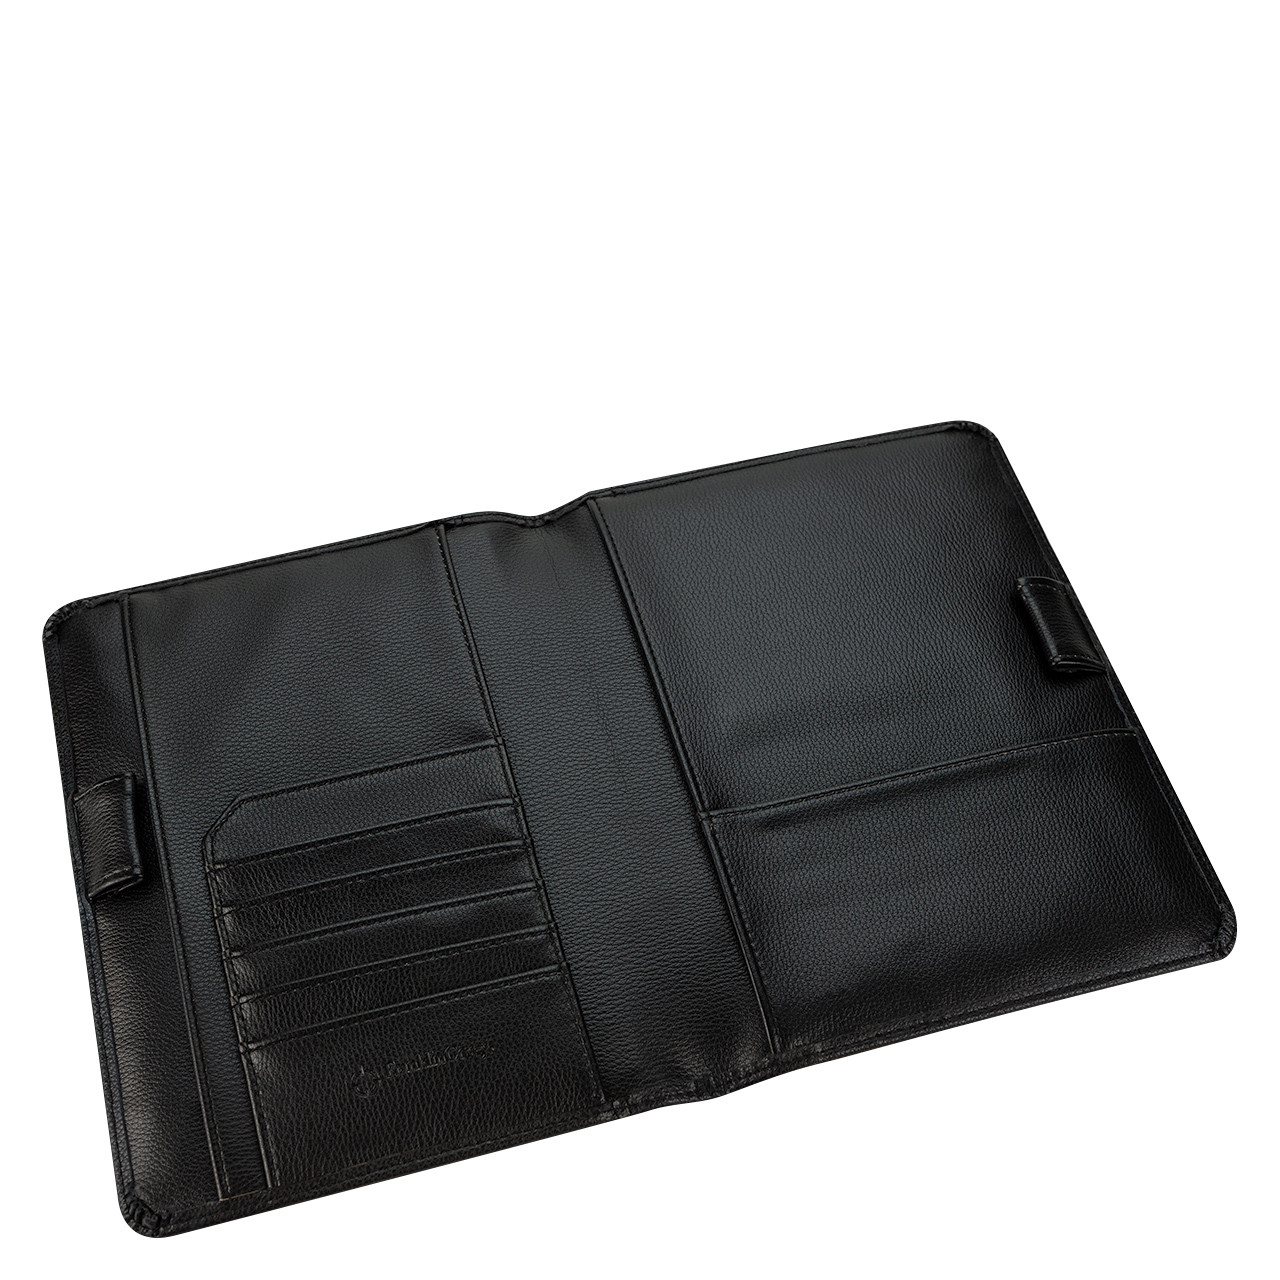 Franklin Covey Black Leather Zipped Organiser / Purse / Wallet -  Israel